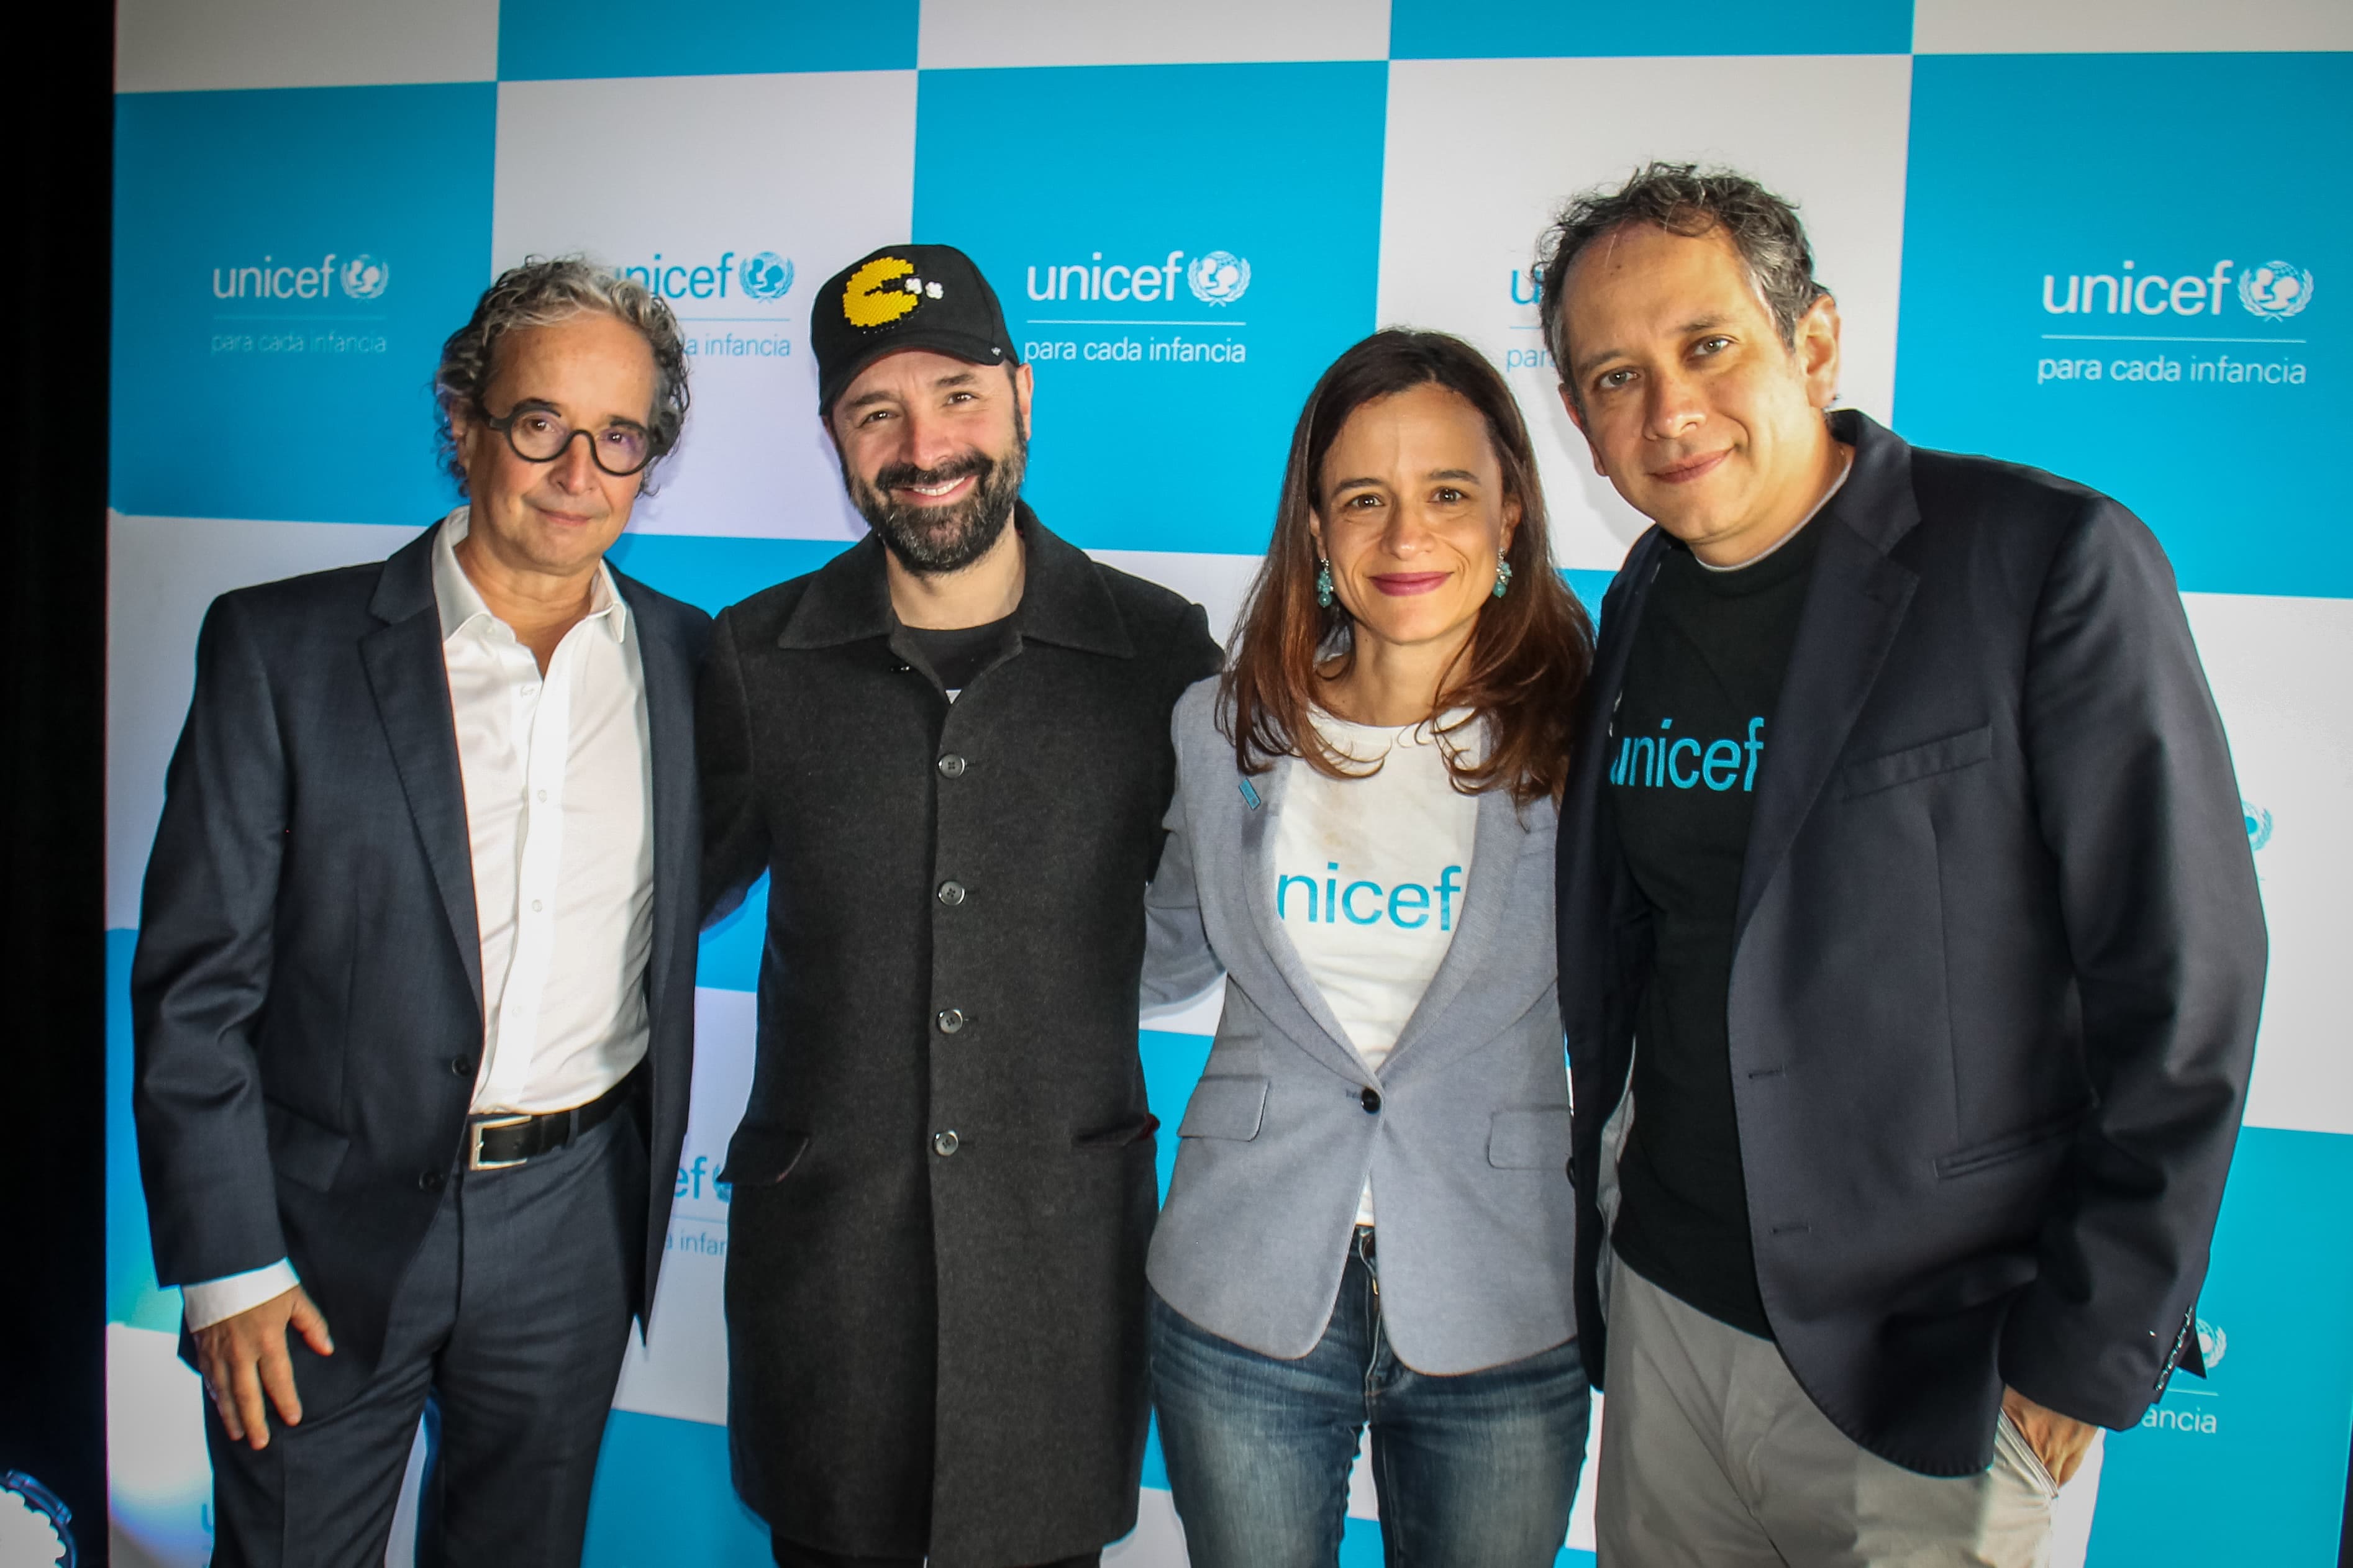 Unicef lanzó su campaña ”En tono azul